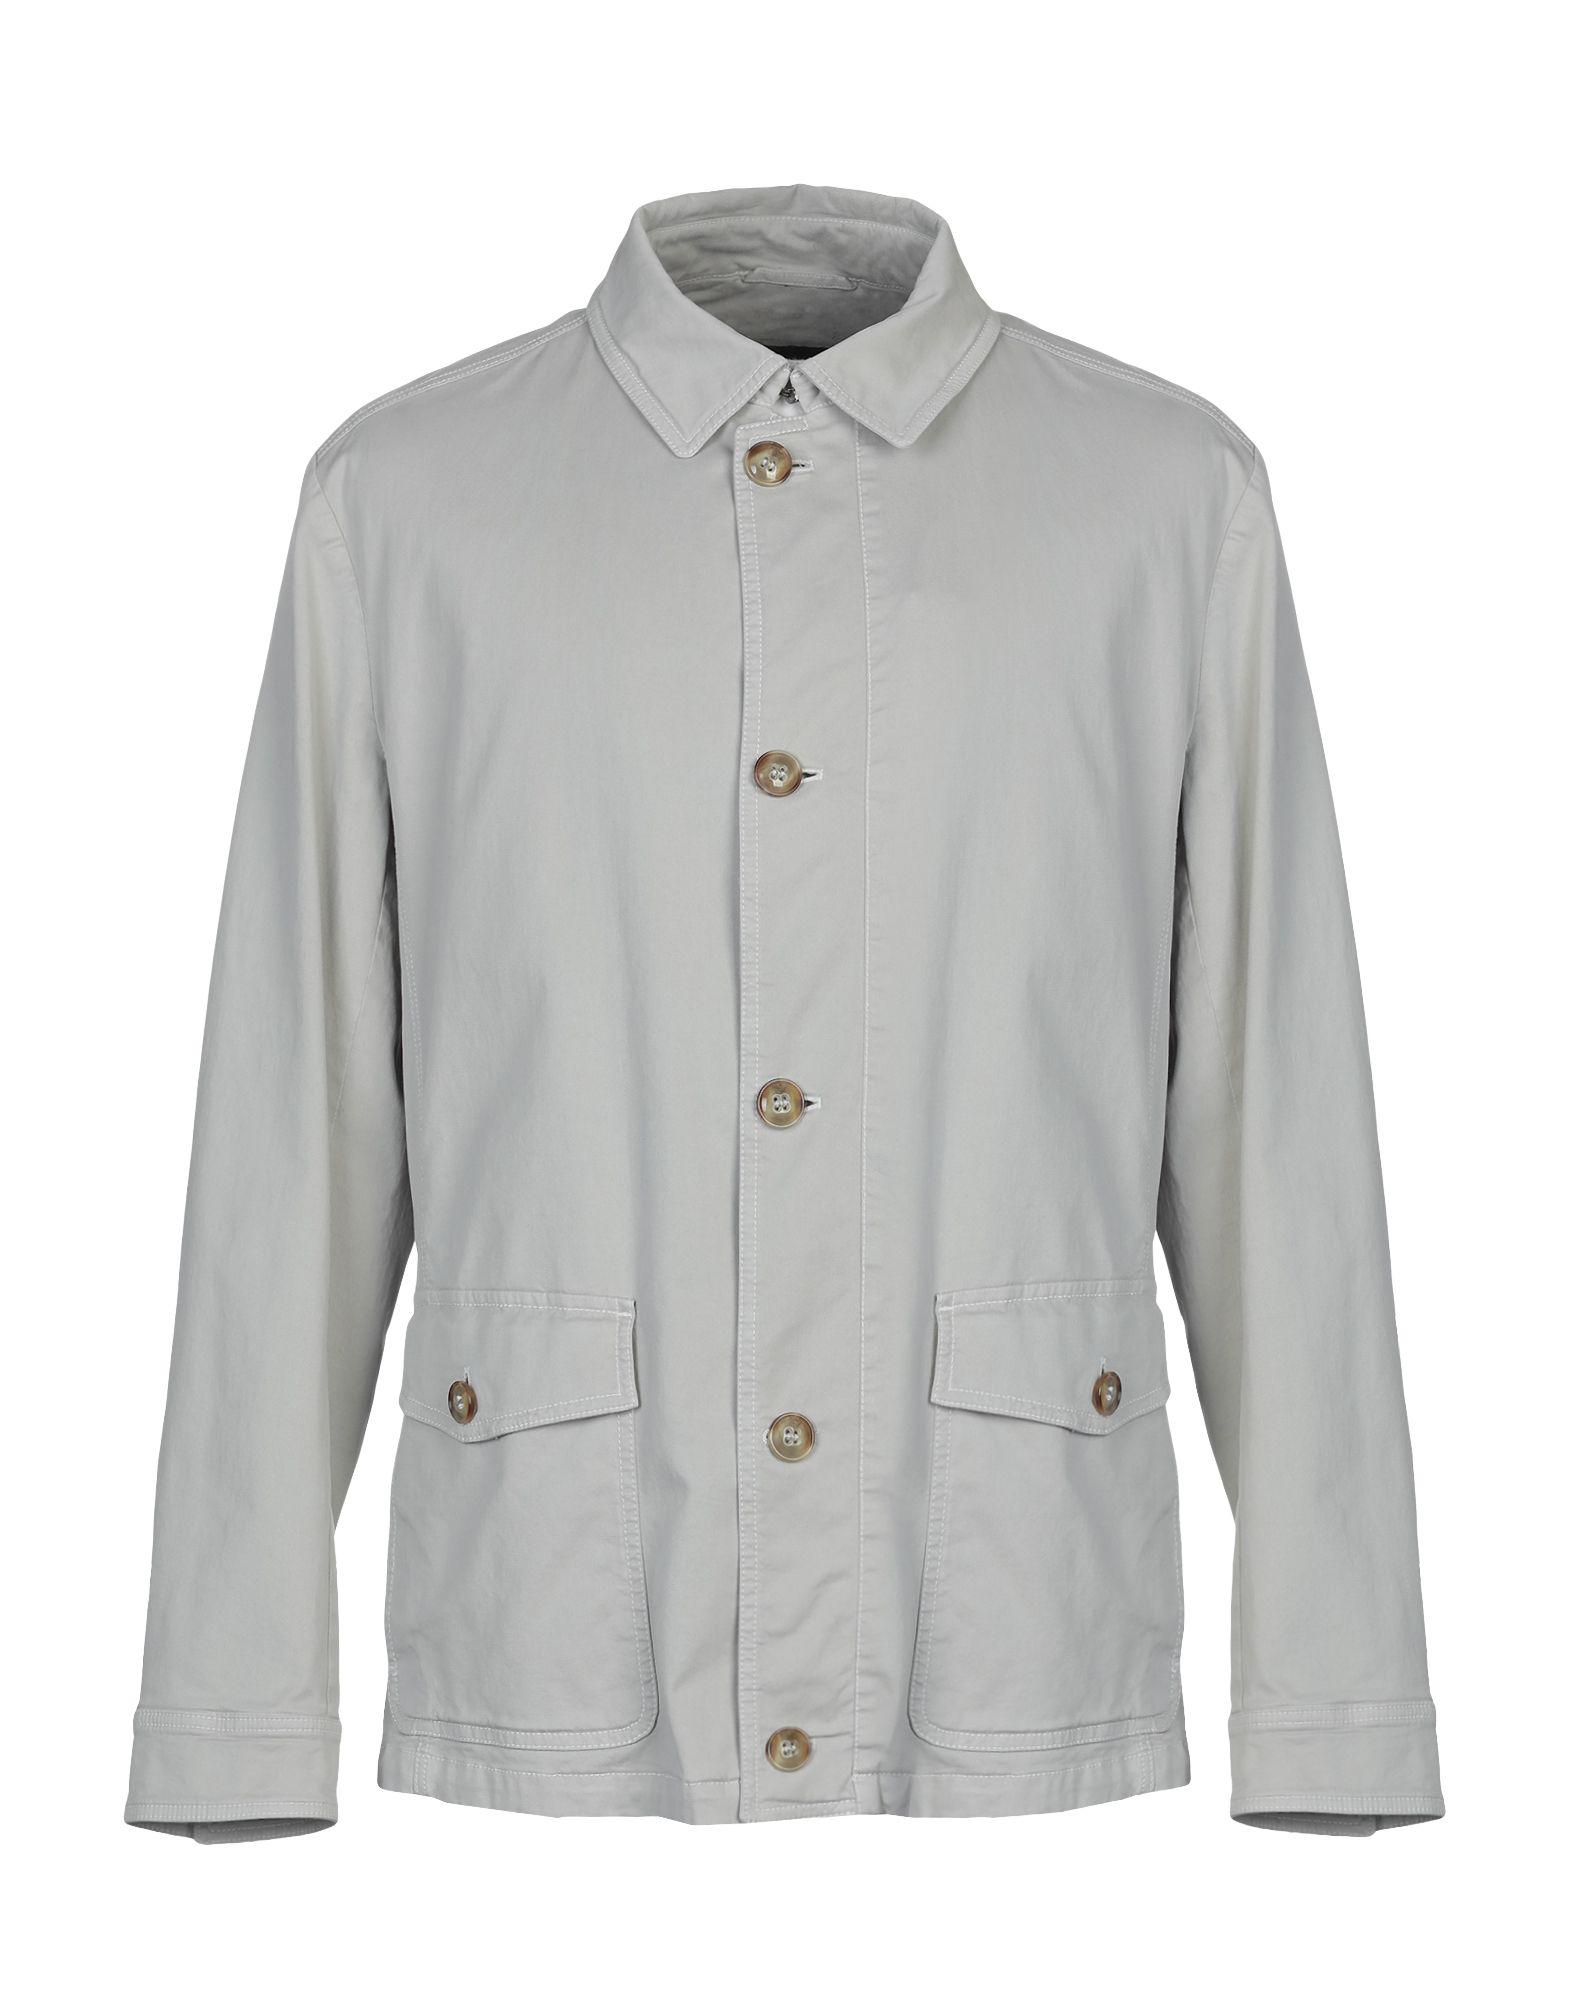 Schneiders Cotton Jacket in Light Grey (Gray) for Men - Lyst